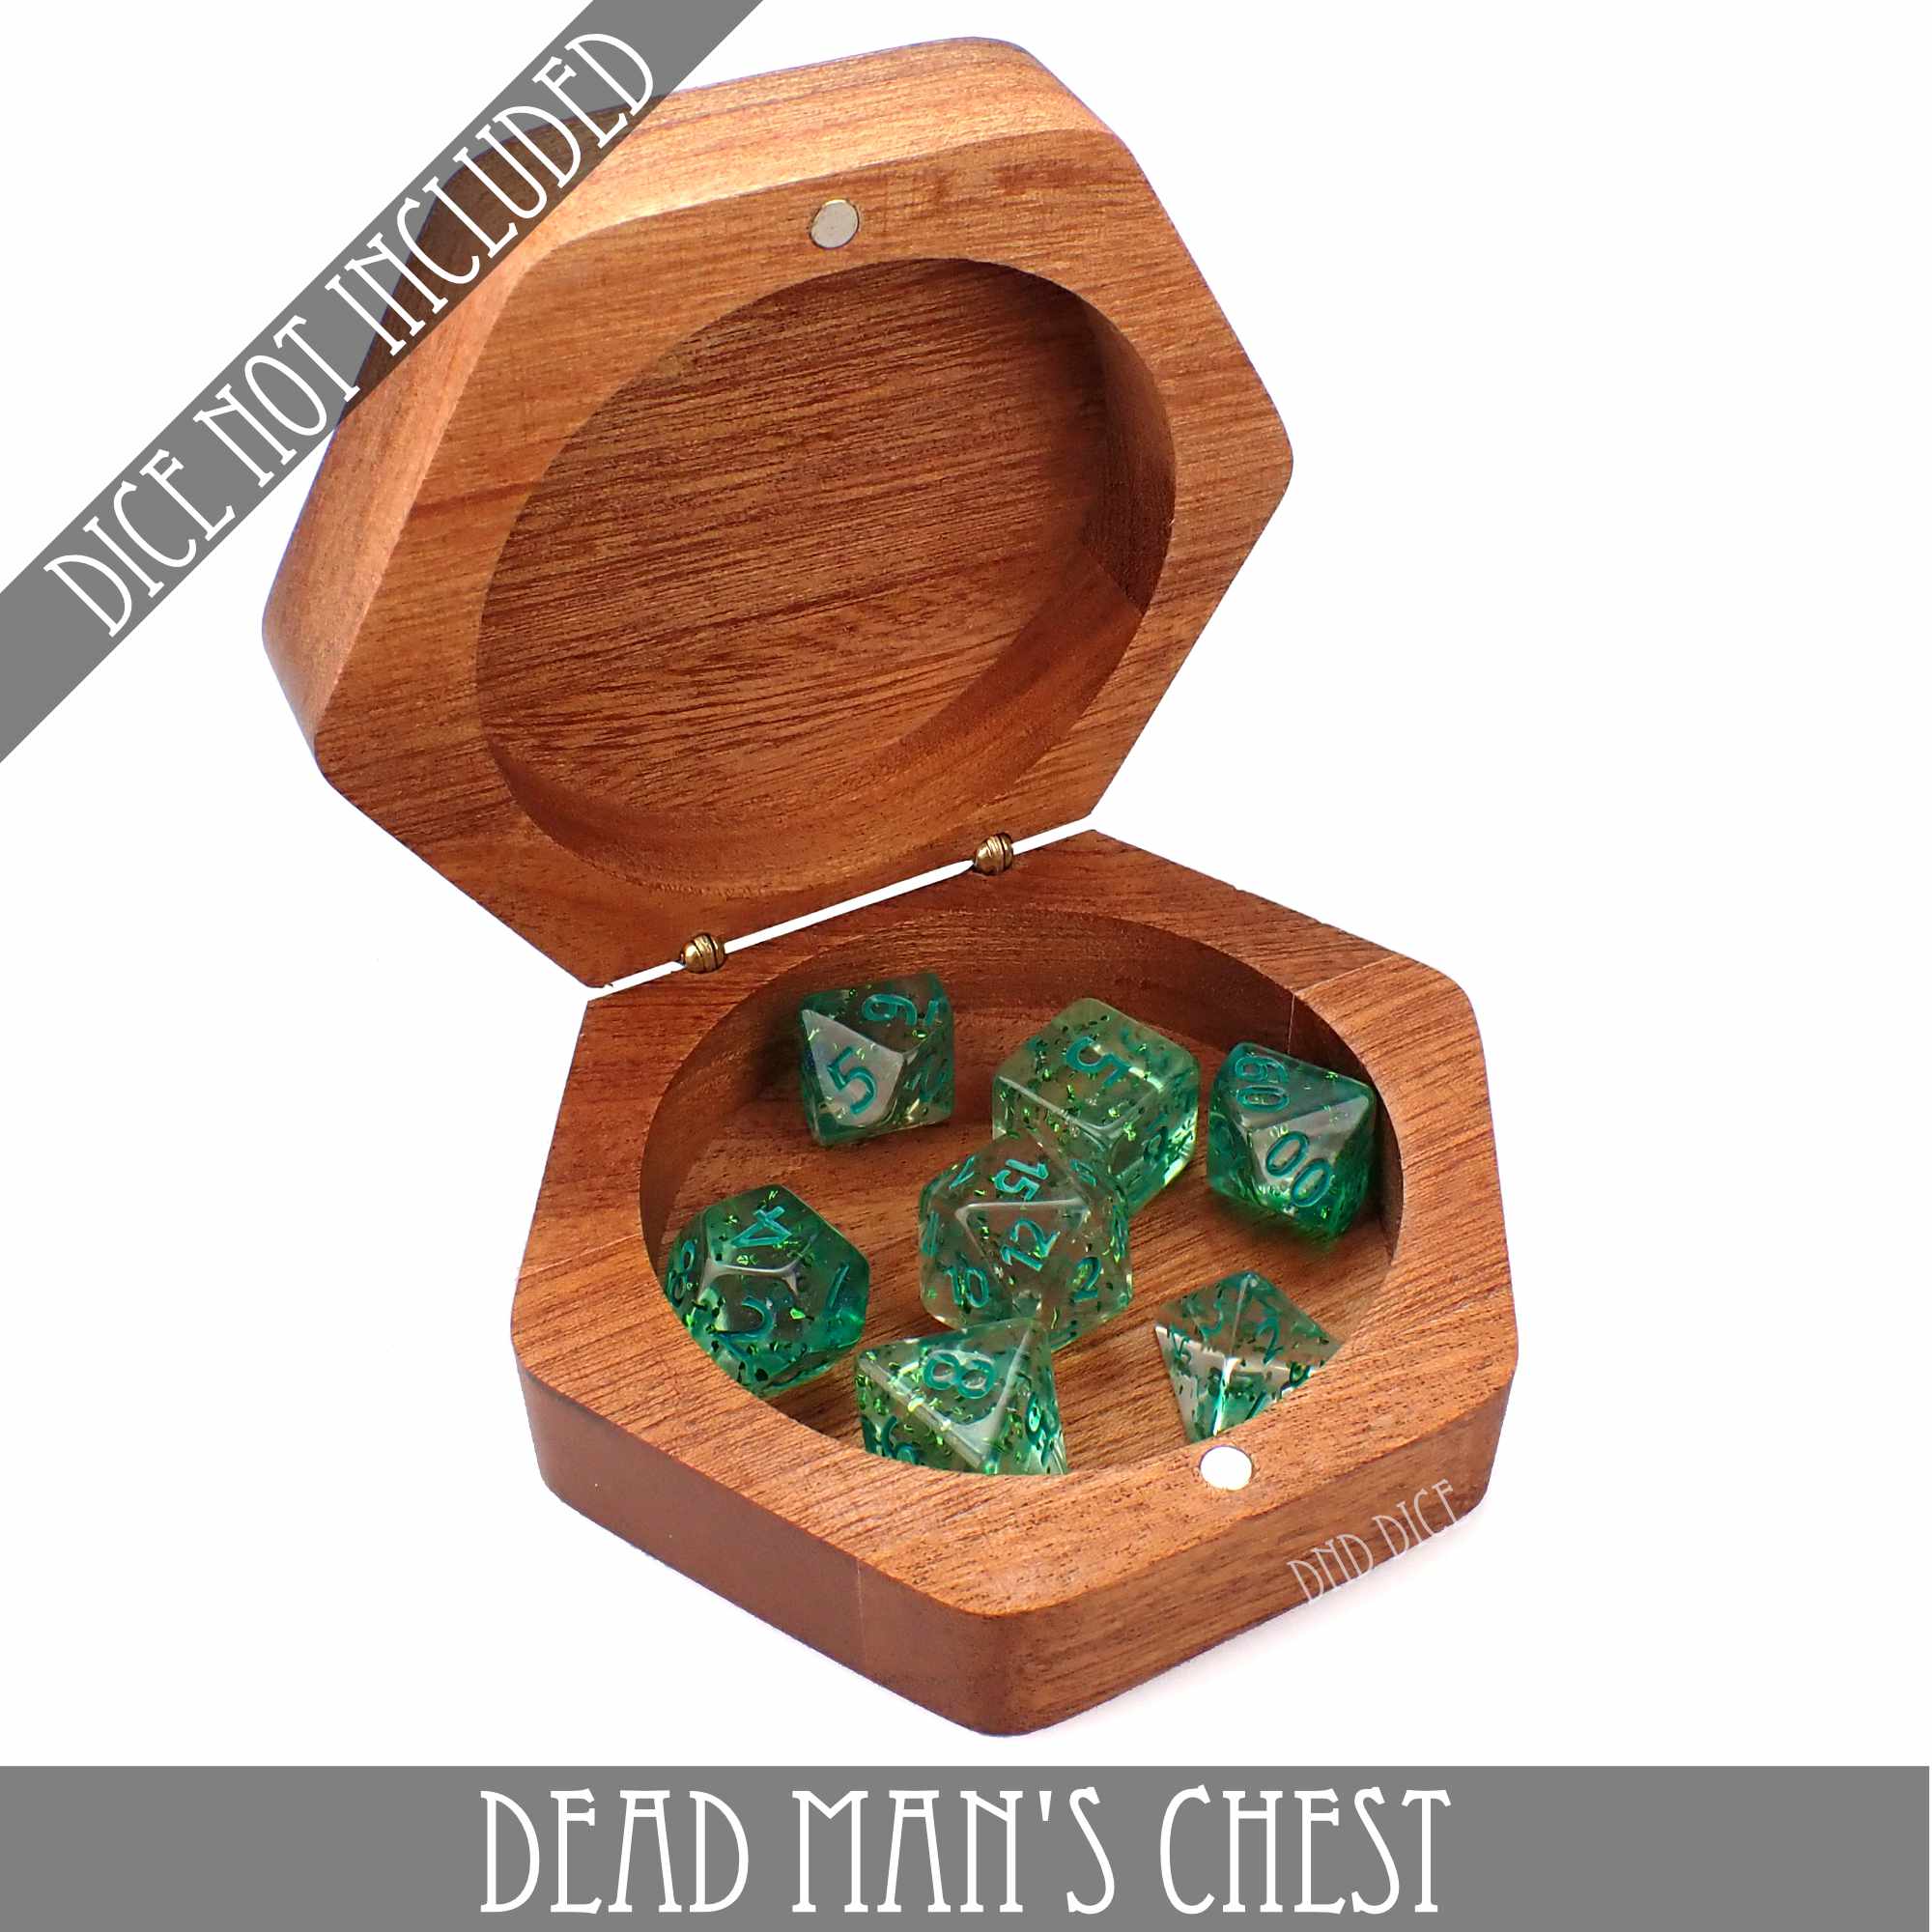 Dead Man's Chest Box